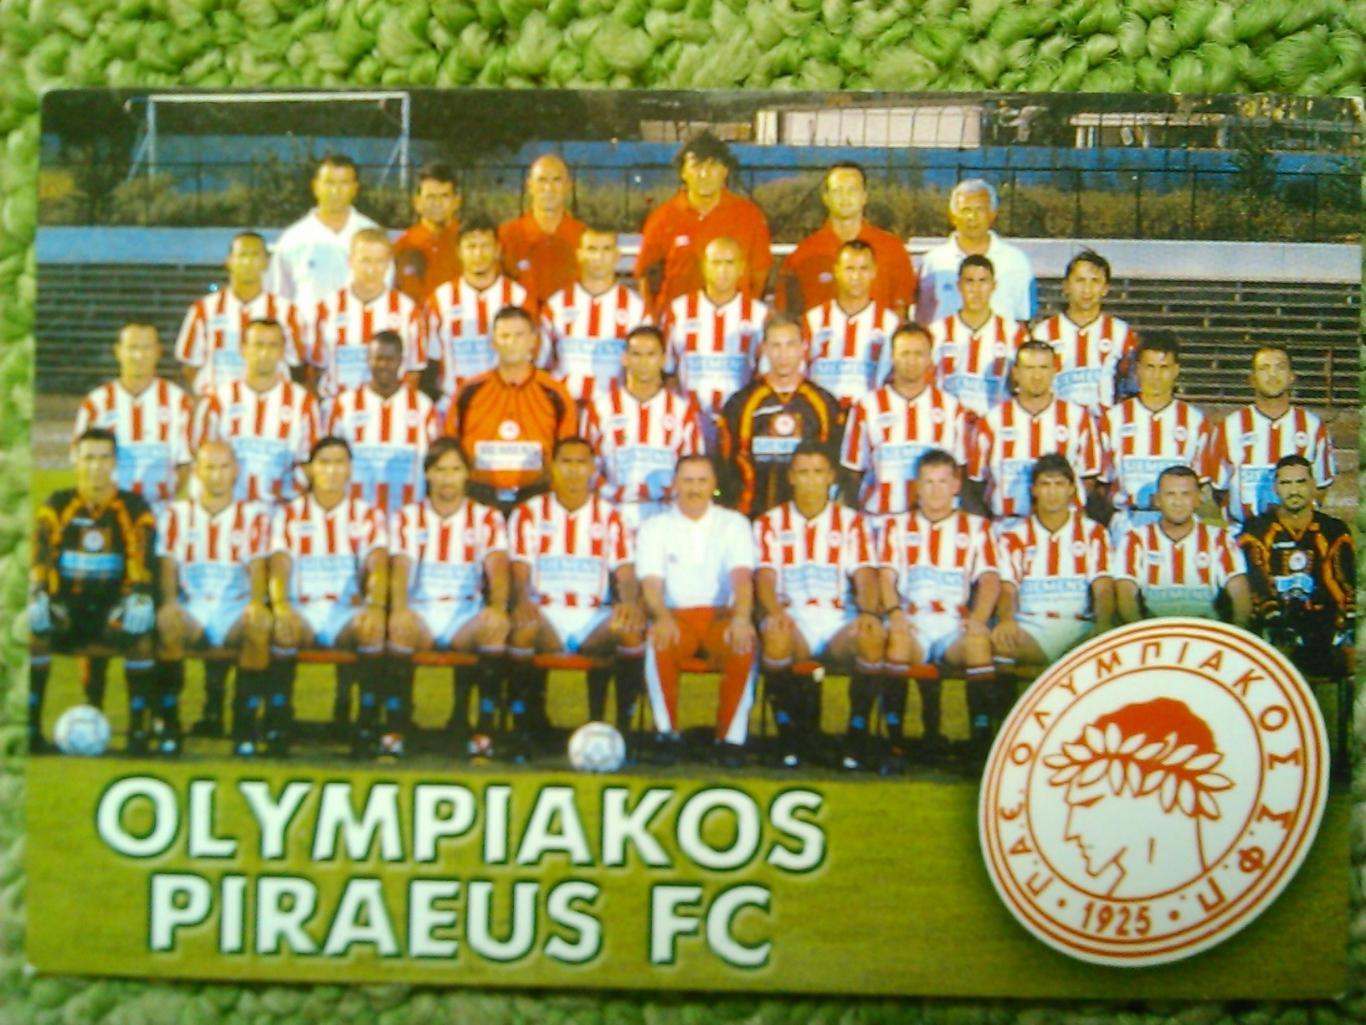 OLYMPIAKOS Piraues FC/ ОЛИМПИАКОС Пирей ( календарик 2002). ОПТОМ СКИДКИ ДО 45%!